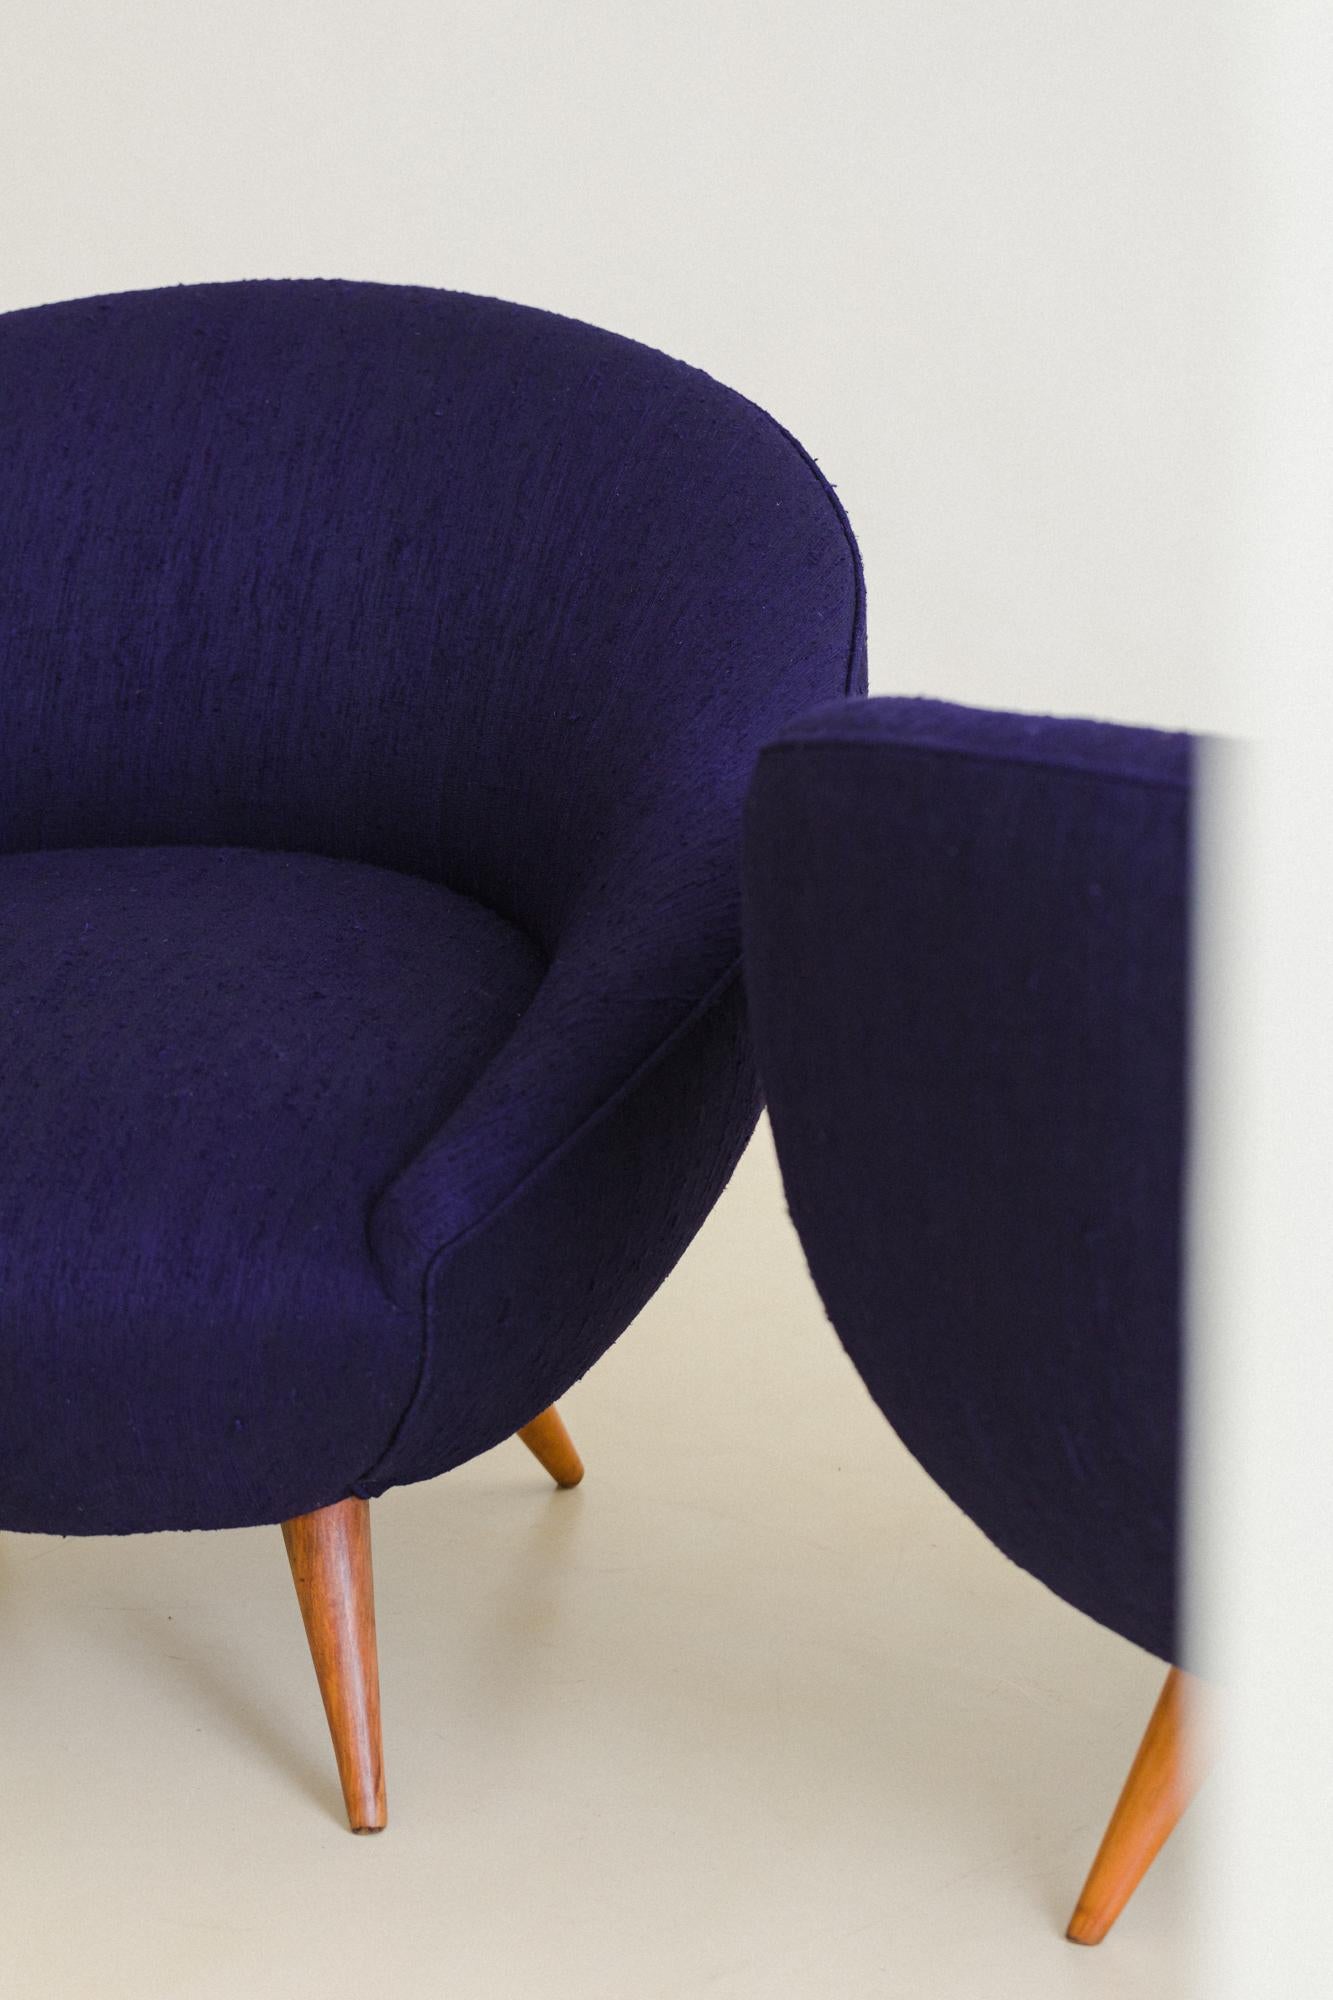 Brazilian Midcentury Design, Round Armchairs, Organic Silk Upholstery, 1950s For Sale 10